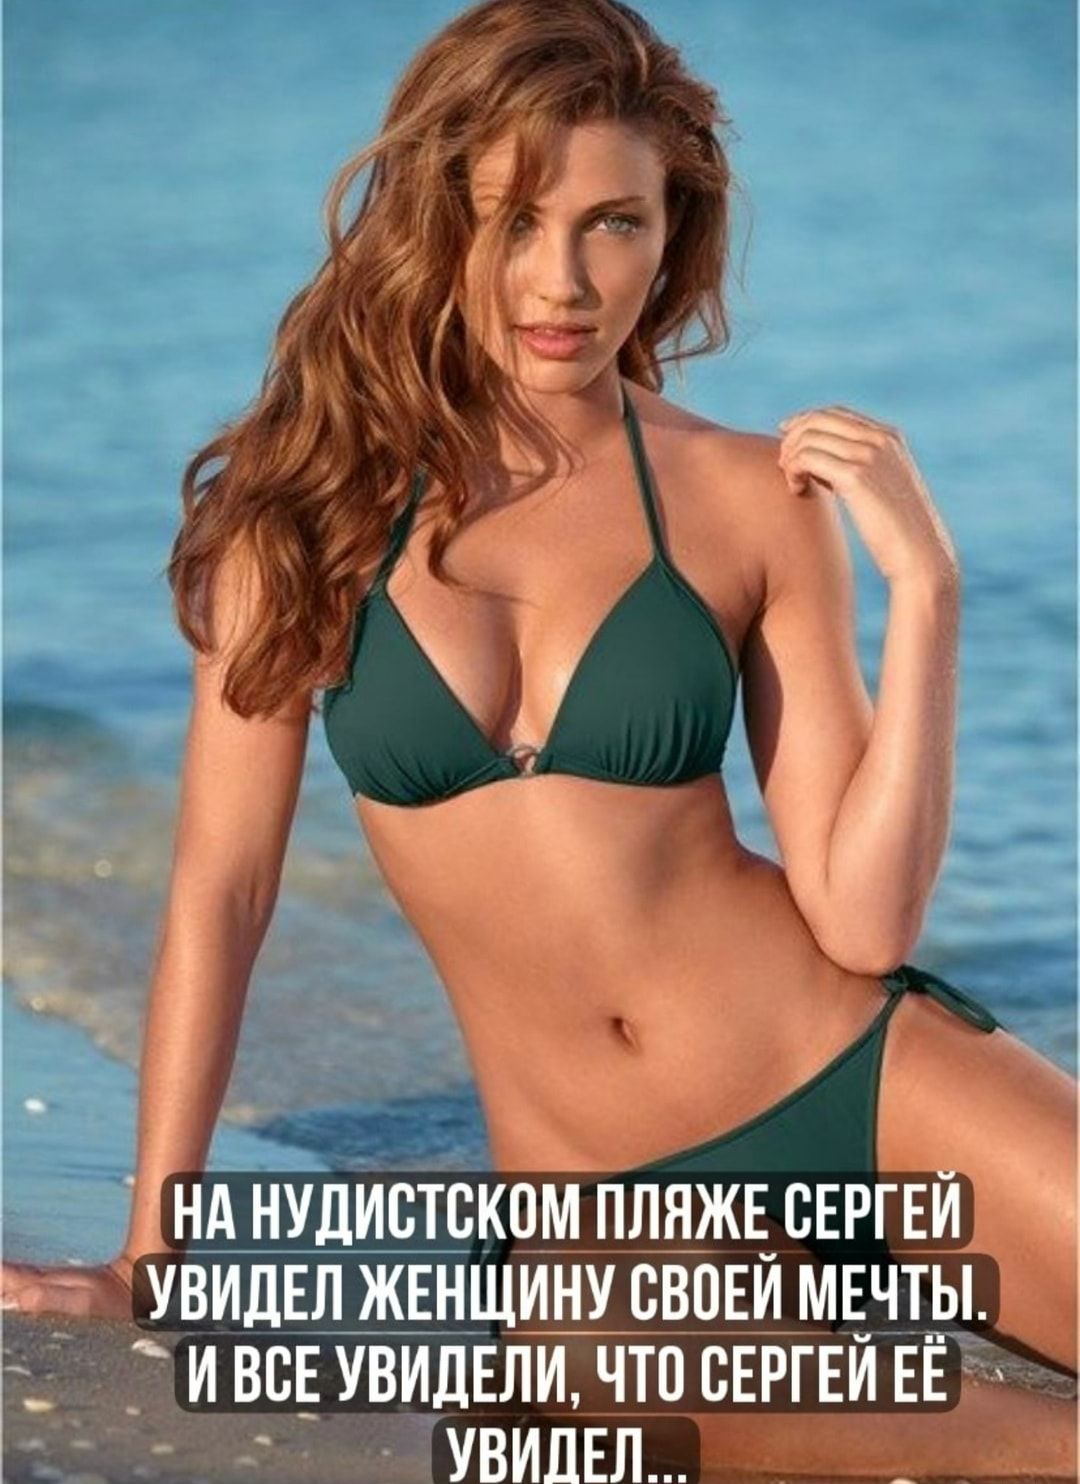 Гагарина сняла лиф прямо посреди пляжа